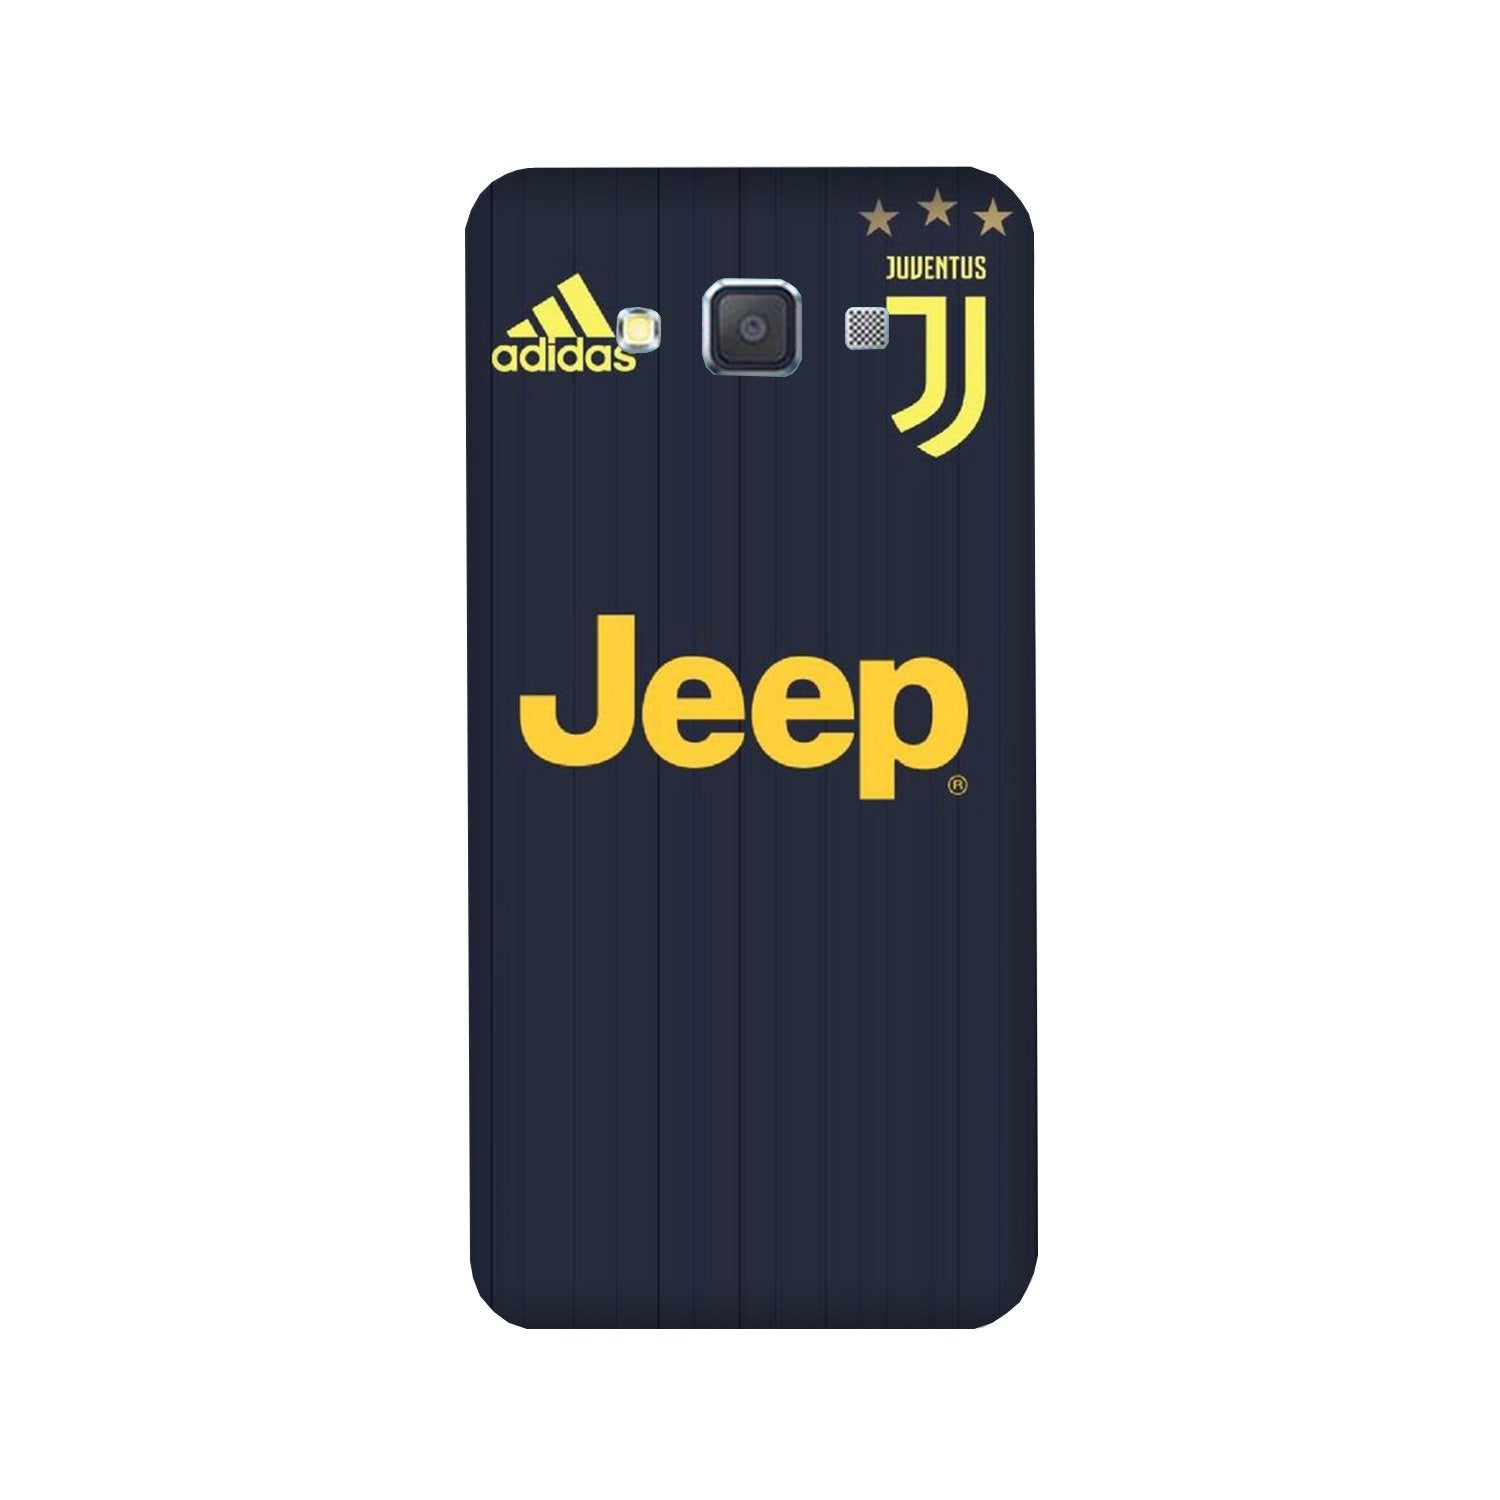 Jeep Juventus Case for Galaxy A3 (2015)  (Design - 161)